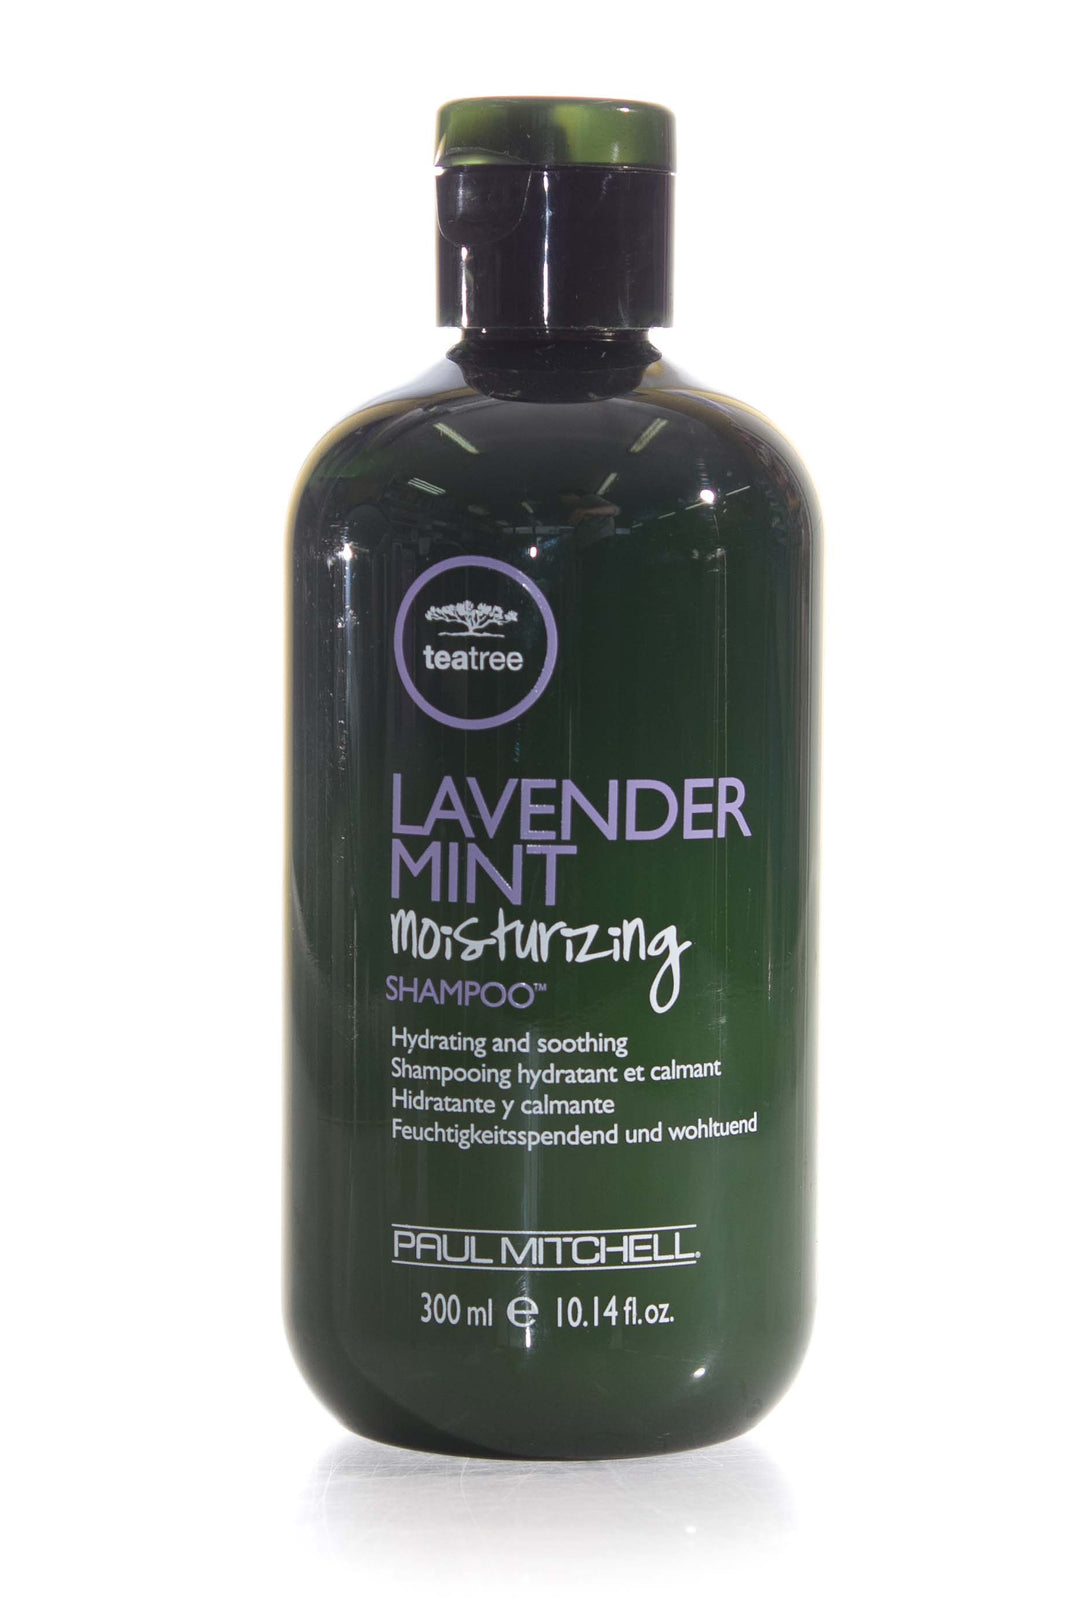 paul-mitchell-tea-tree-lavender-mint-moisturizing-shampoo-300ml